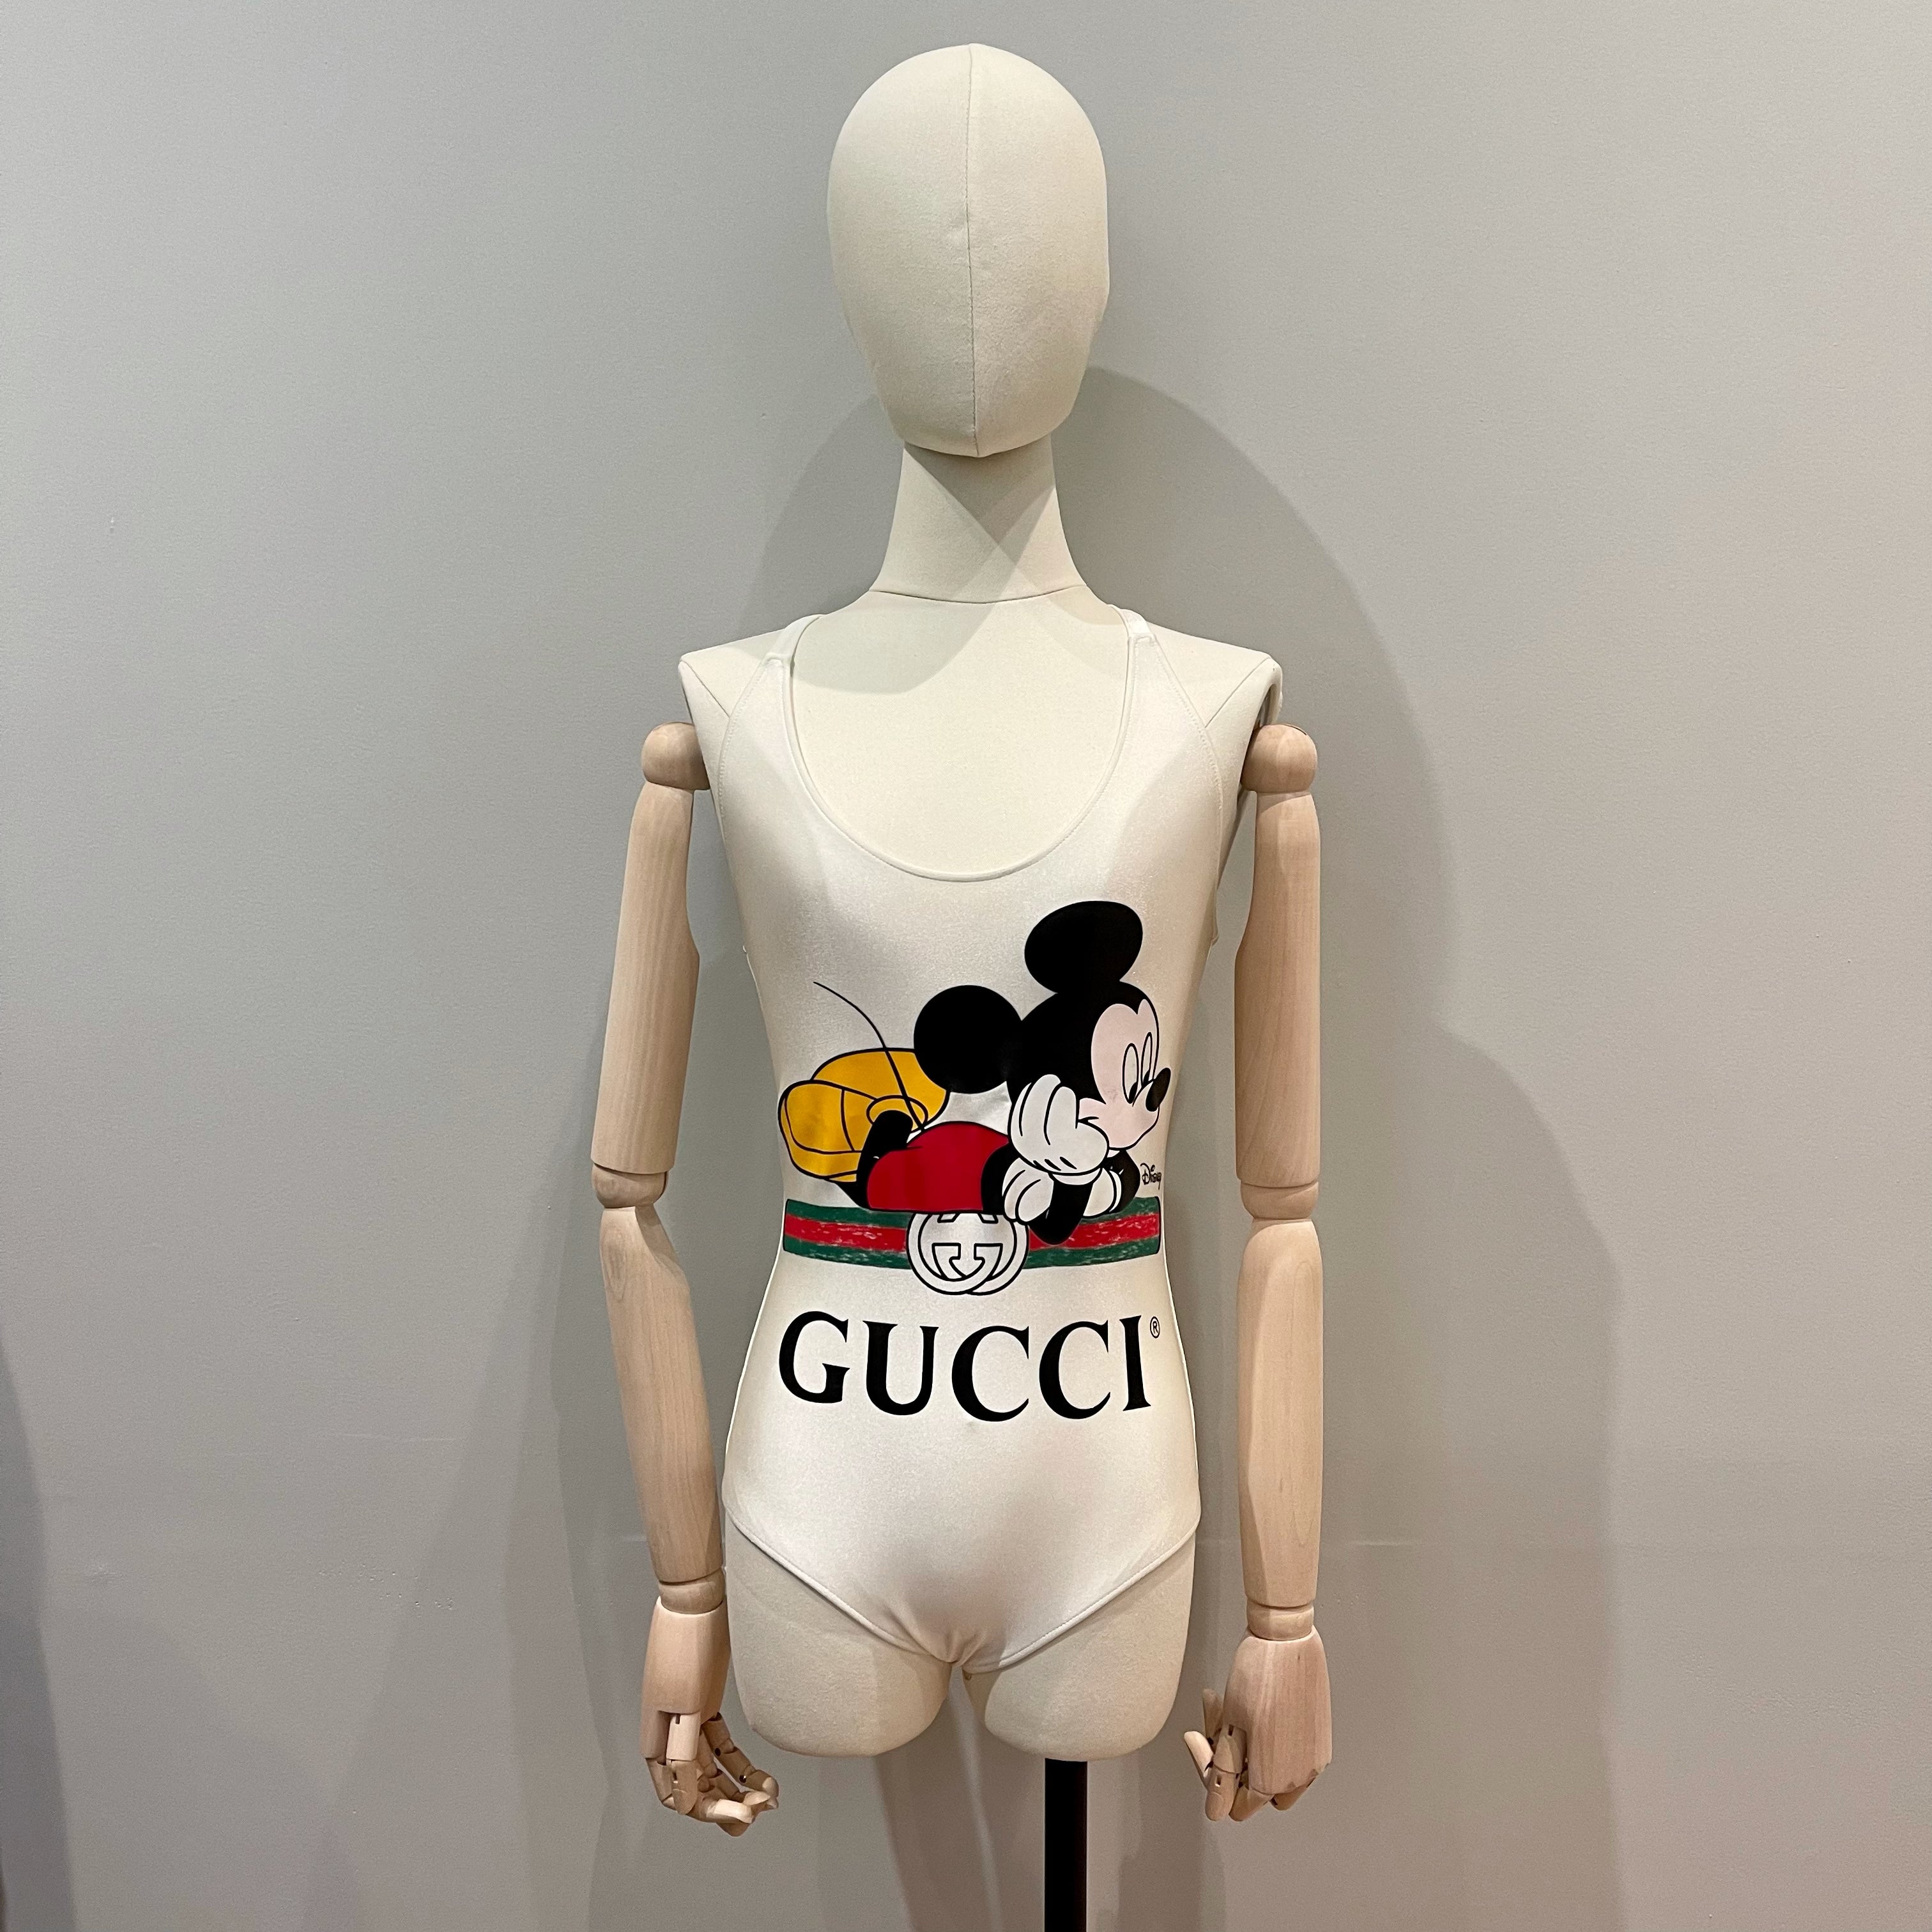 Gucci x Disney One-Piece Swimsuit w/ Tags - White - GDUIC20954